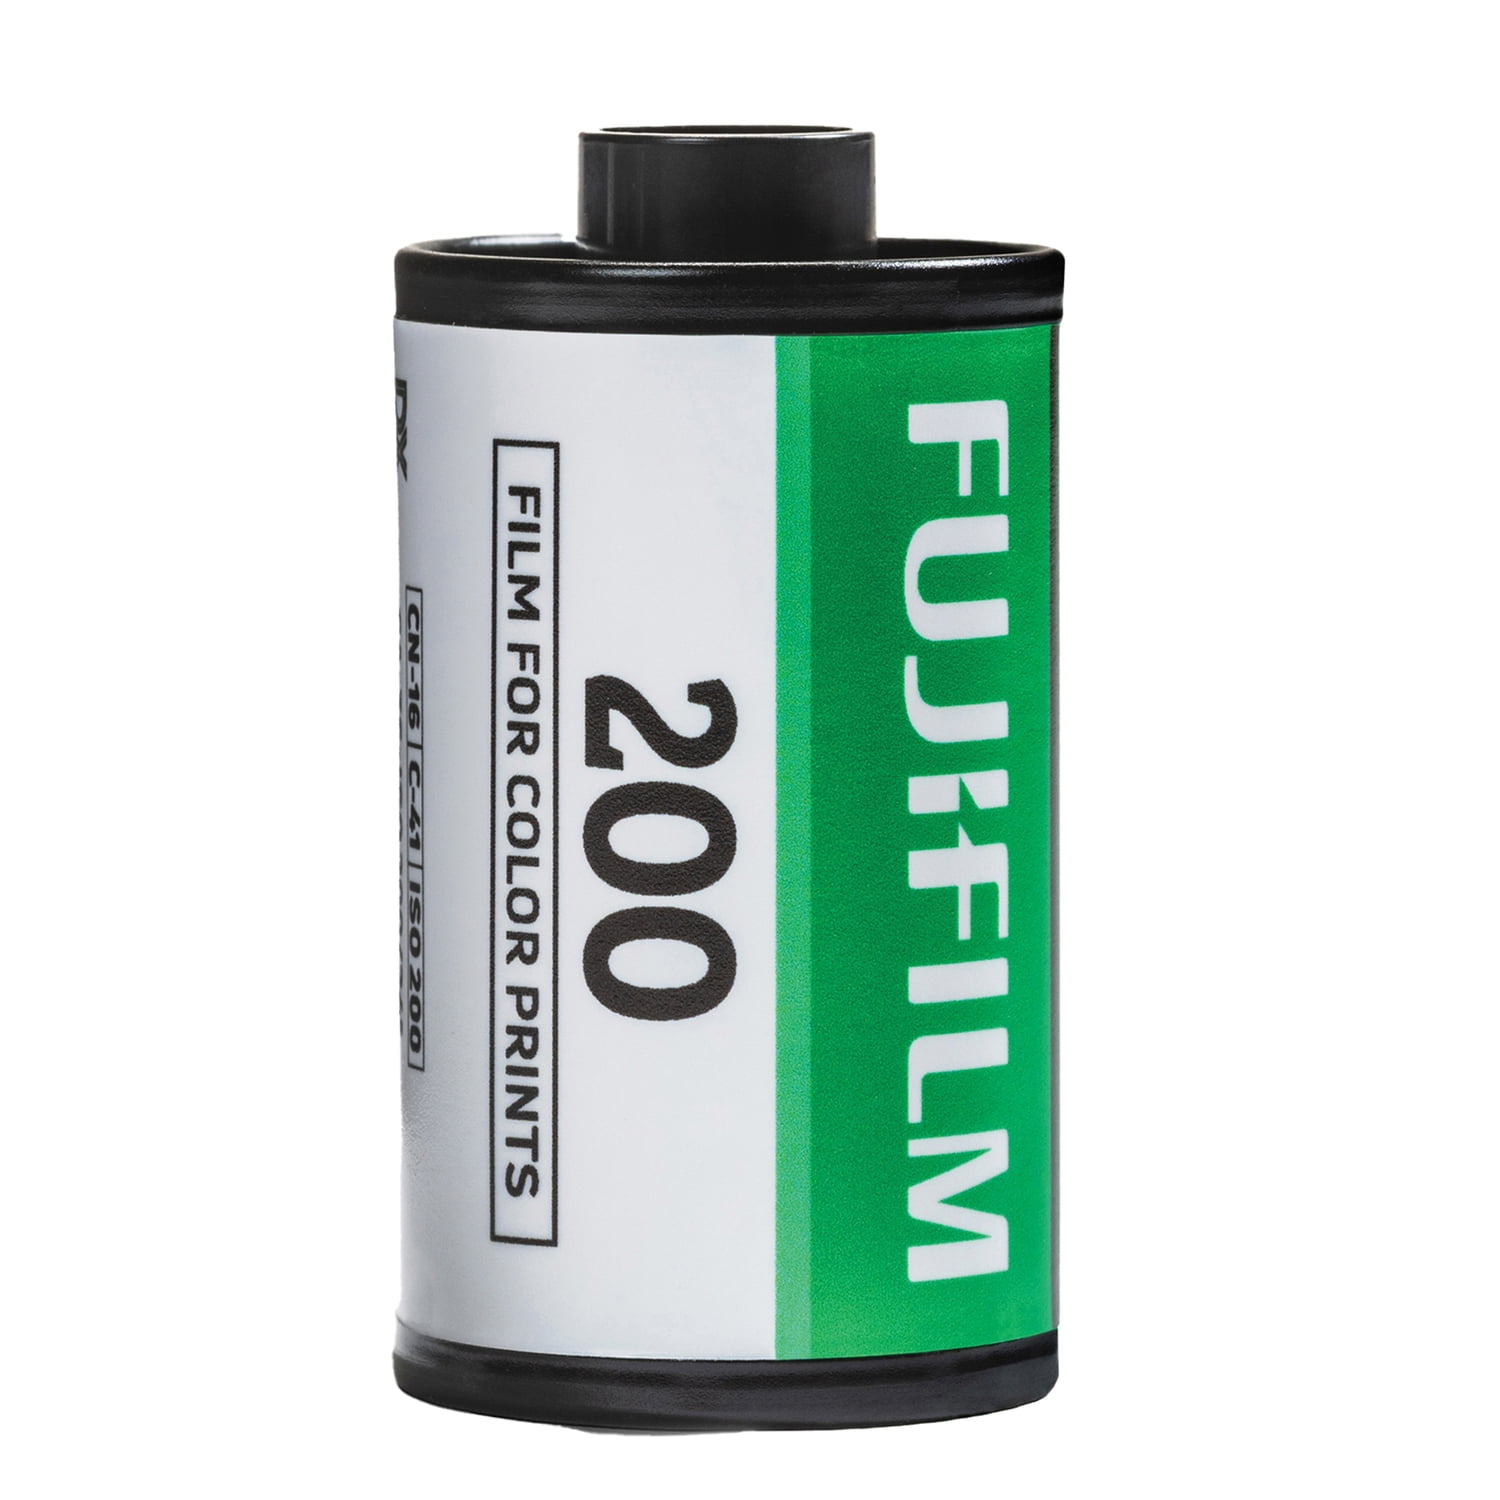 FUJIFILM ISO 200 36-Exposure Color Negative Film for UK